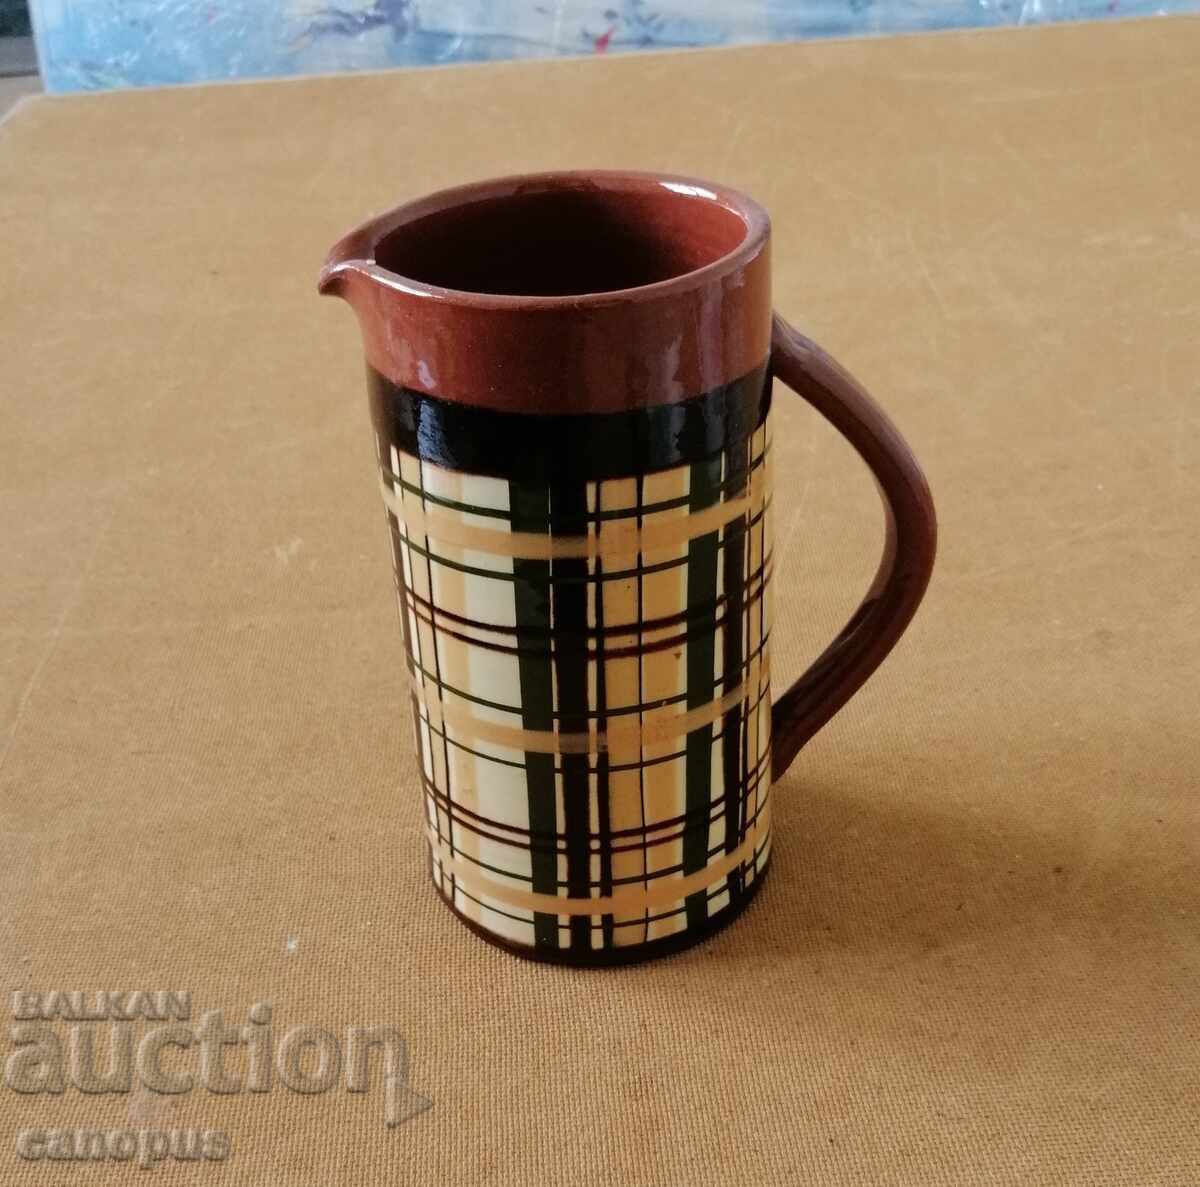 Old Ceramic Mug - Jug - Large Cup